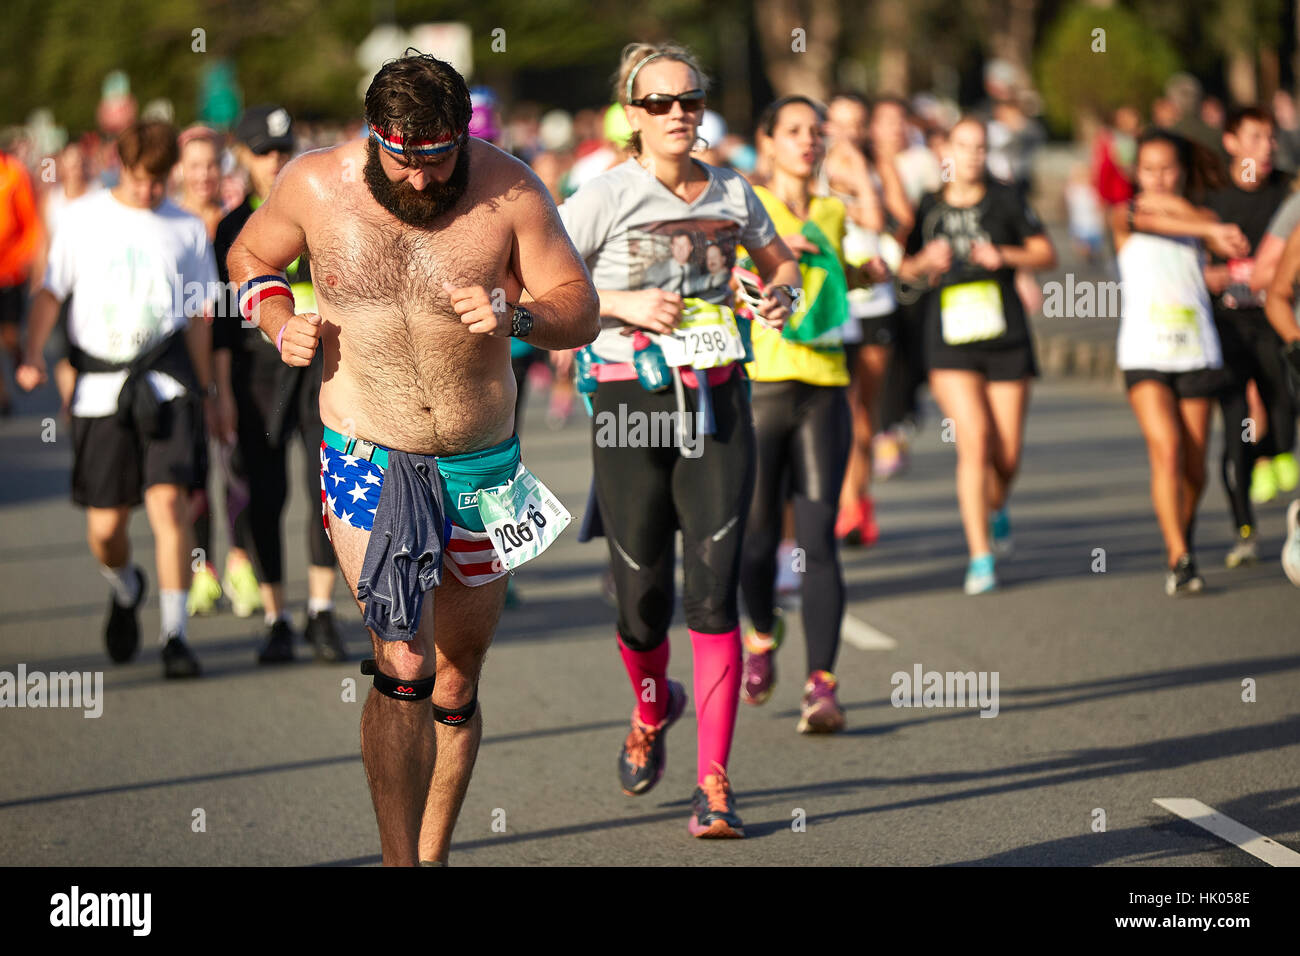 Hairy Male Athlete Running In The Nike Woman's Half Marathon, San Francisco, 2015. Stock Photo